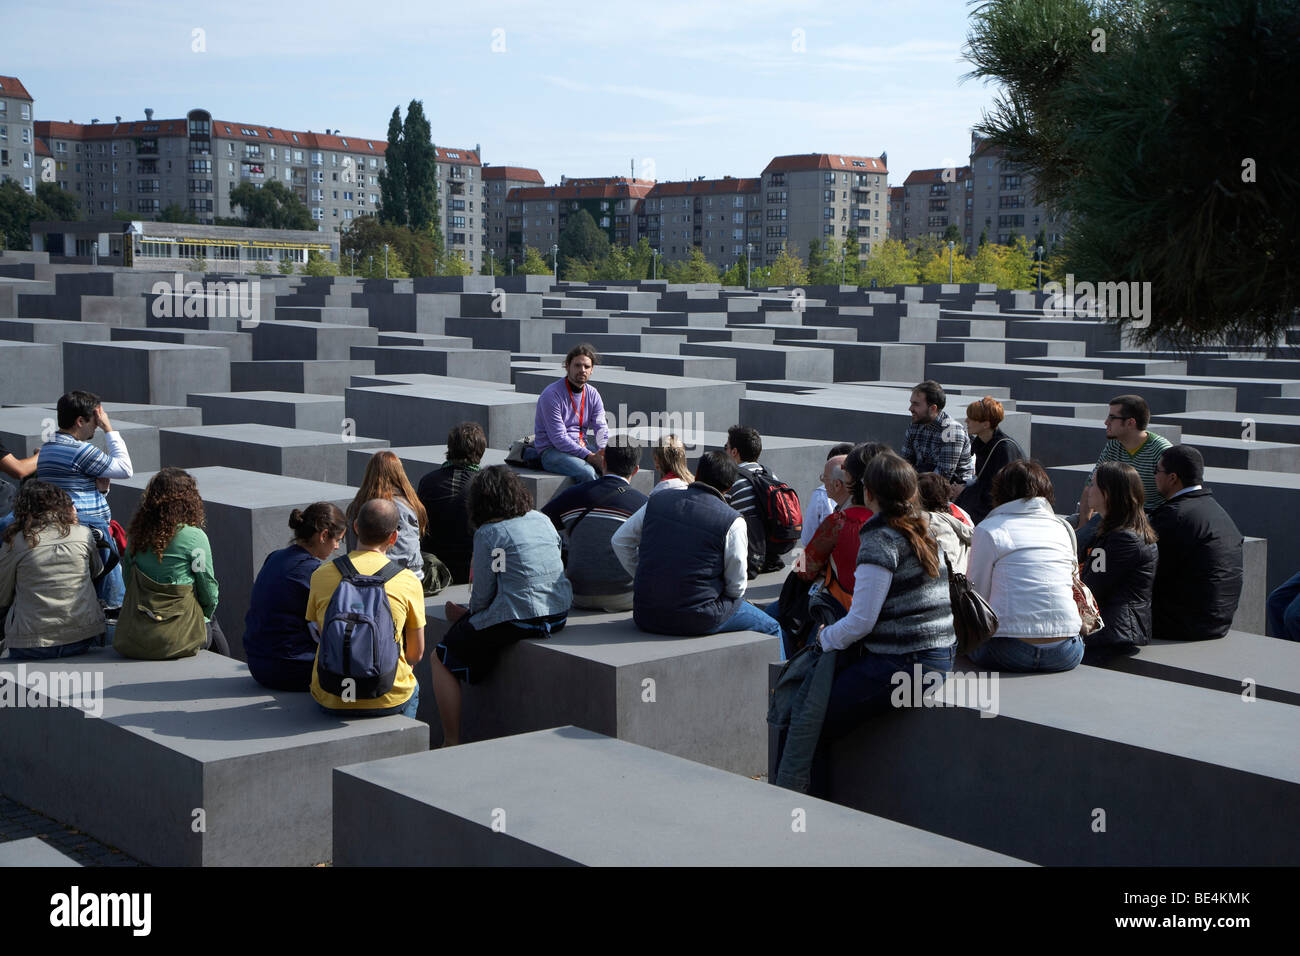 Denkmal für die ermordeten Juden Europas, Holocaust-Mahnmal in Berlin, Deutschland, Europa Stockfoto